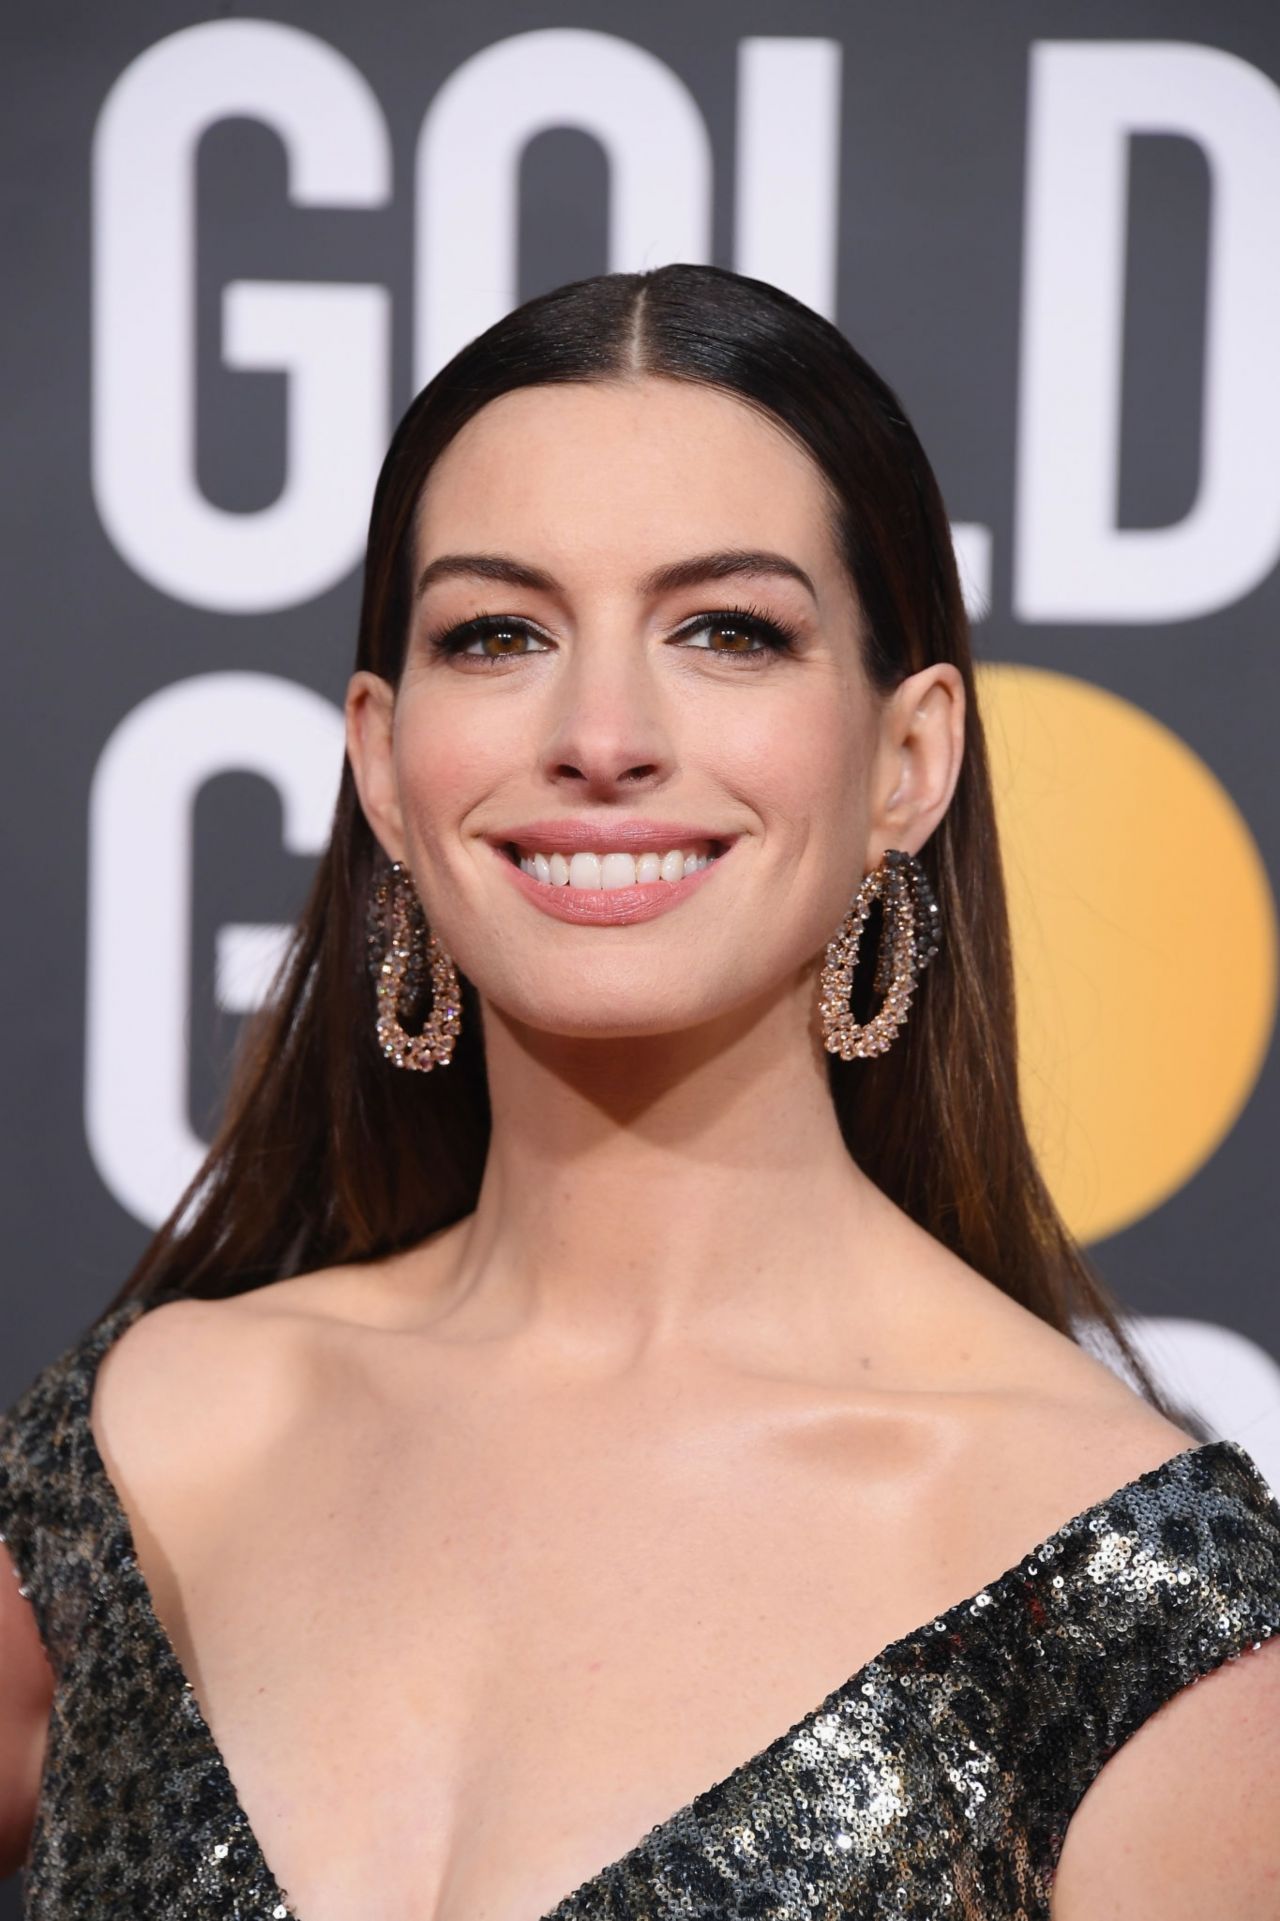 Anne Hathaway – 2019 Golden Globe Awards Red Carpet
